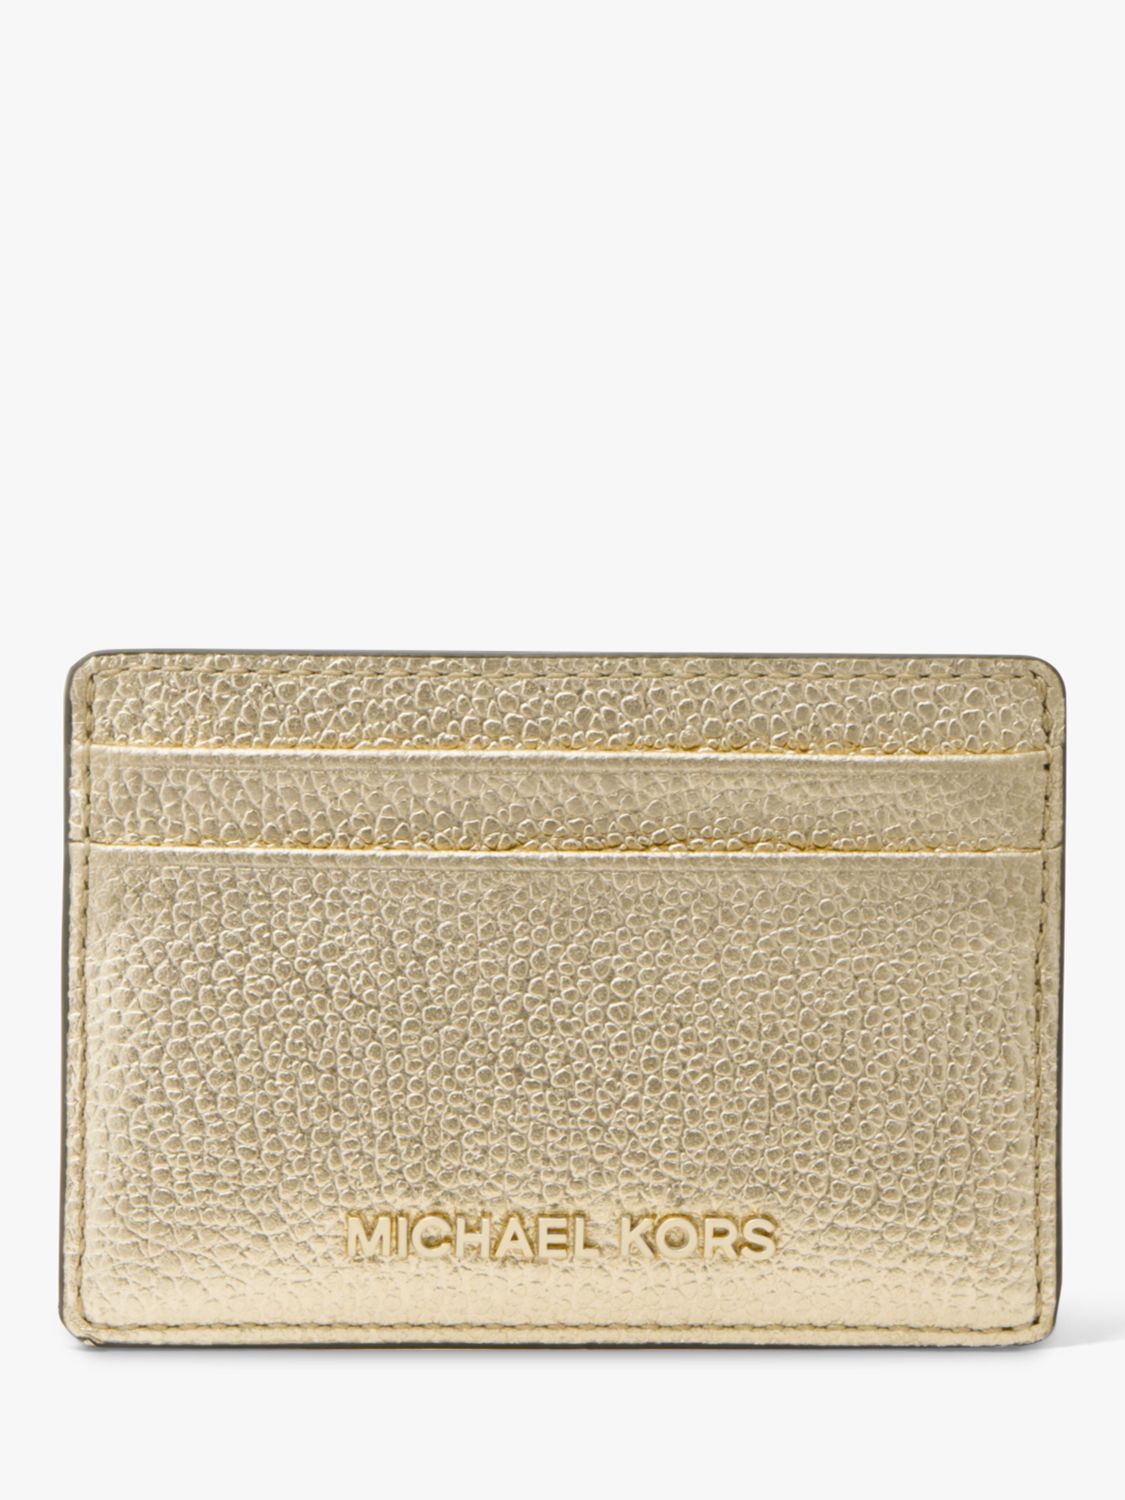 michael kors card purse